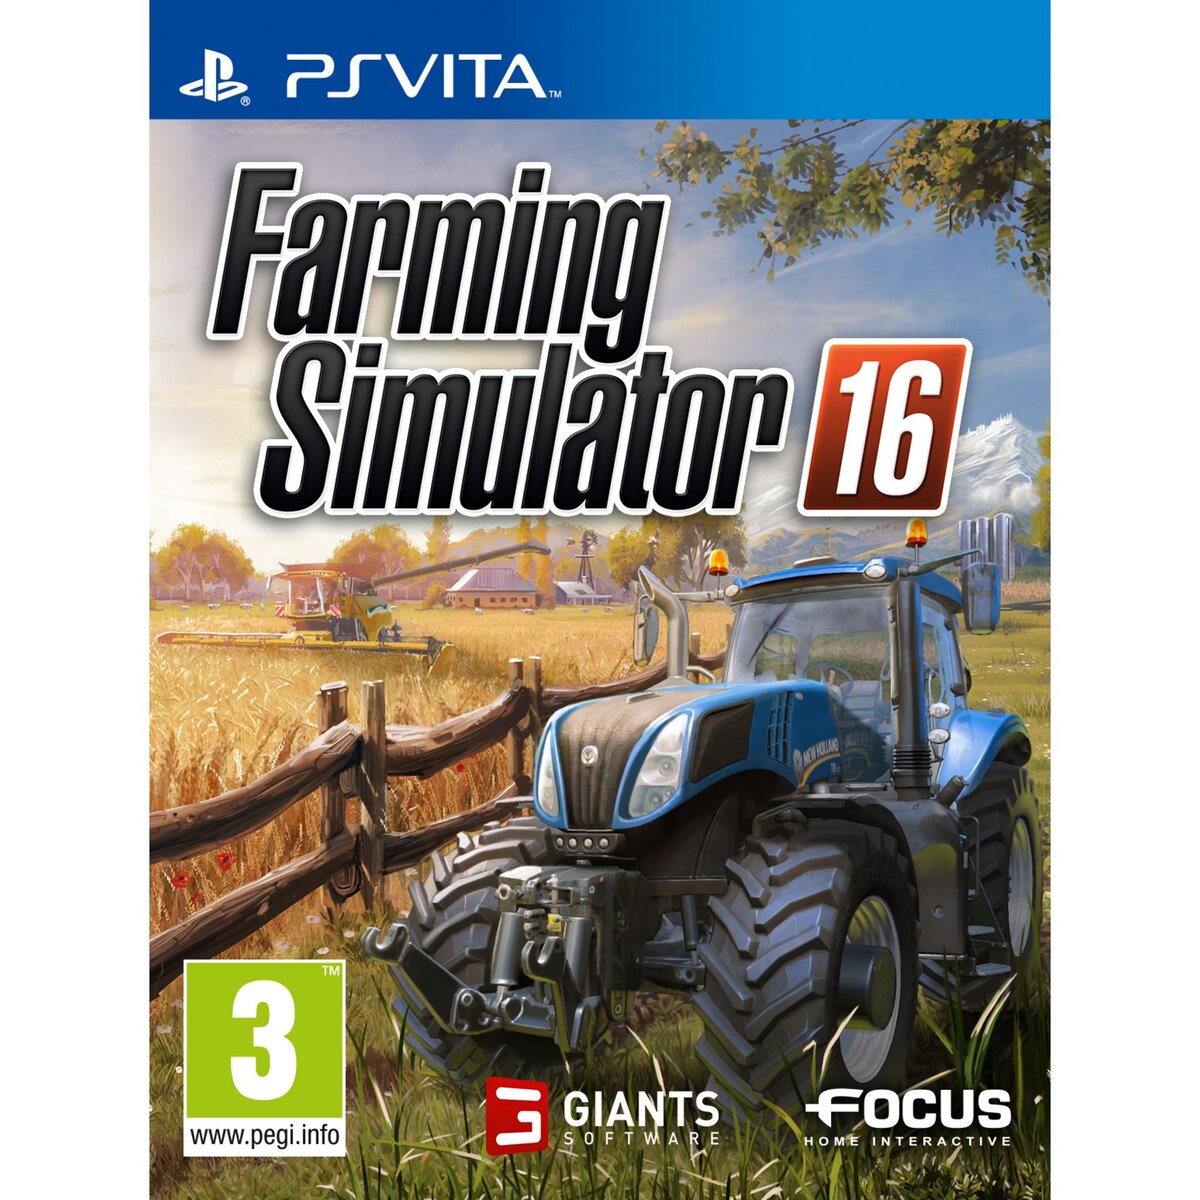 Farming Simulator 16 PS Vita